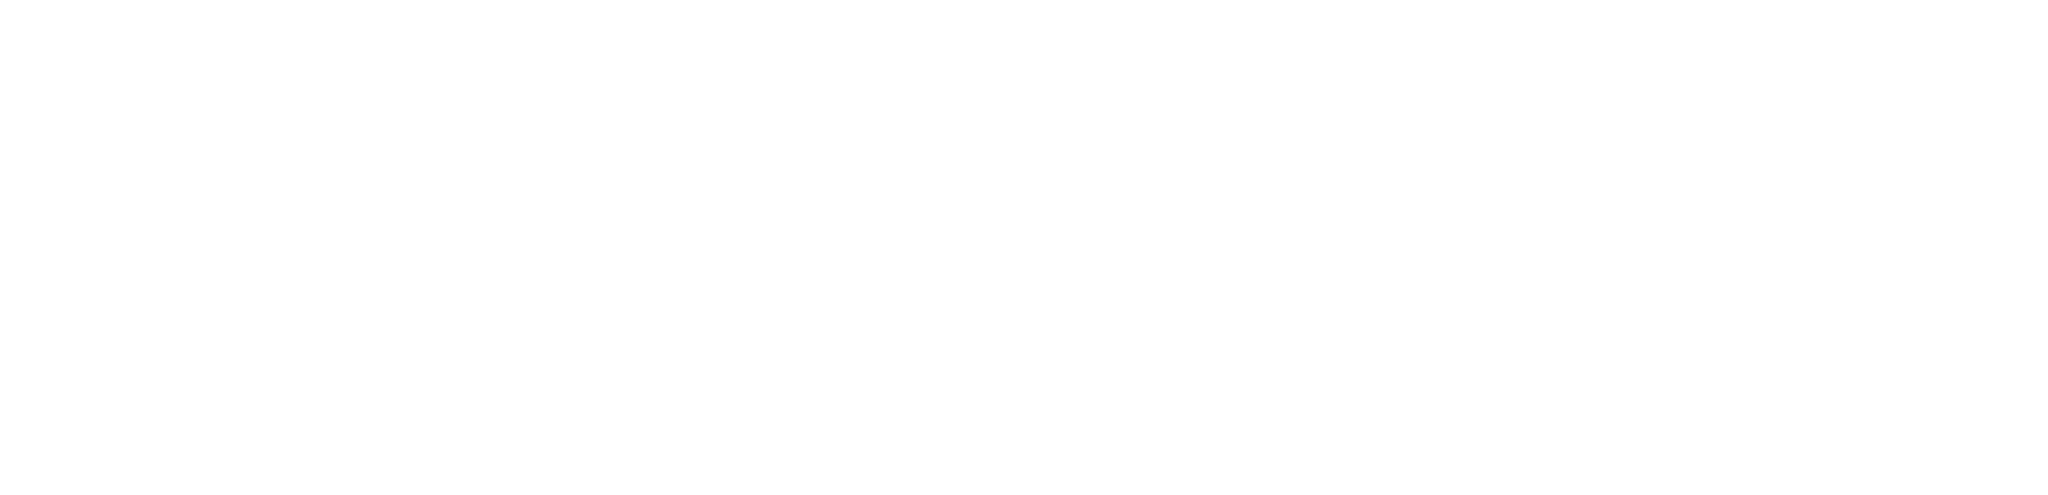 KLiCK-SYS Logo